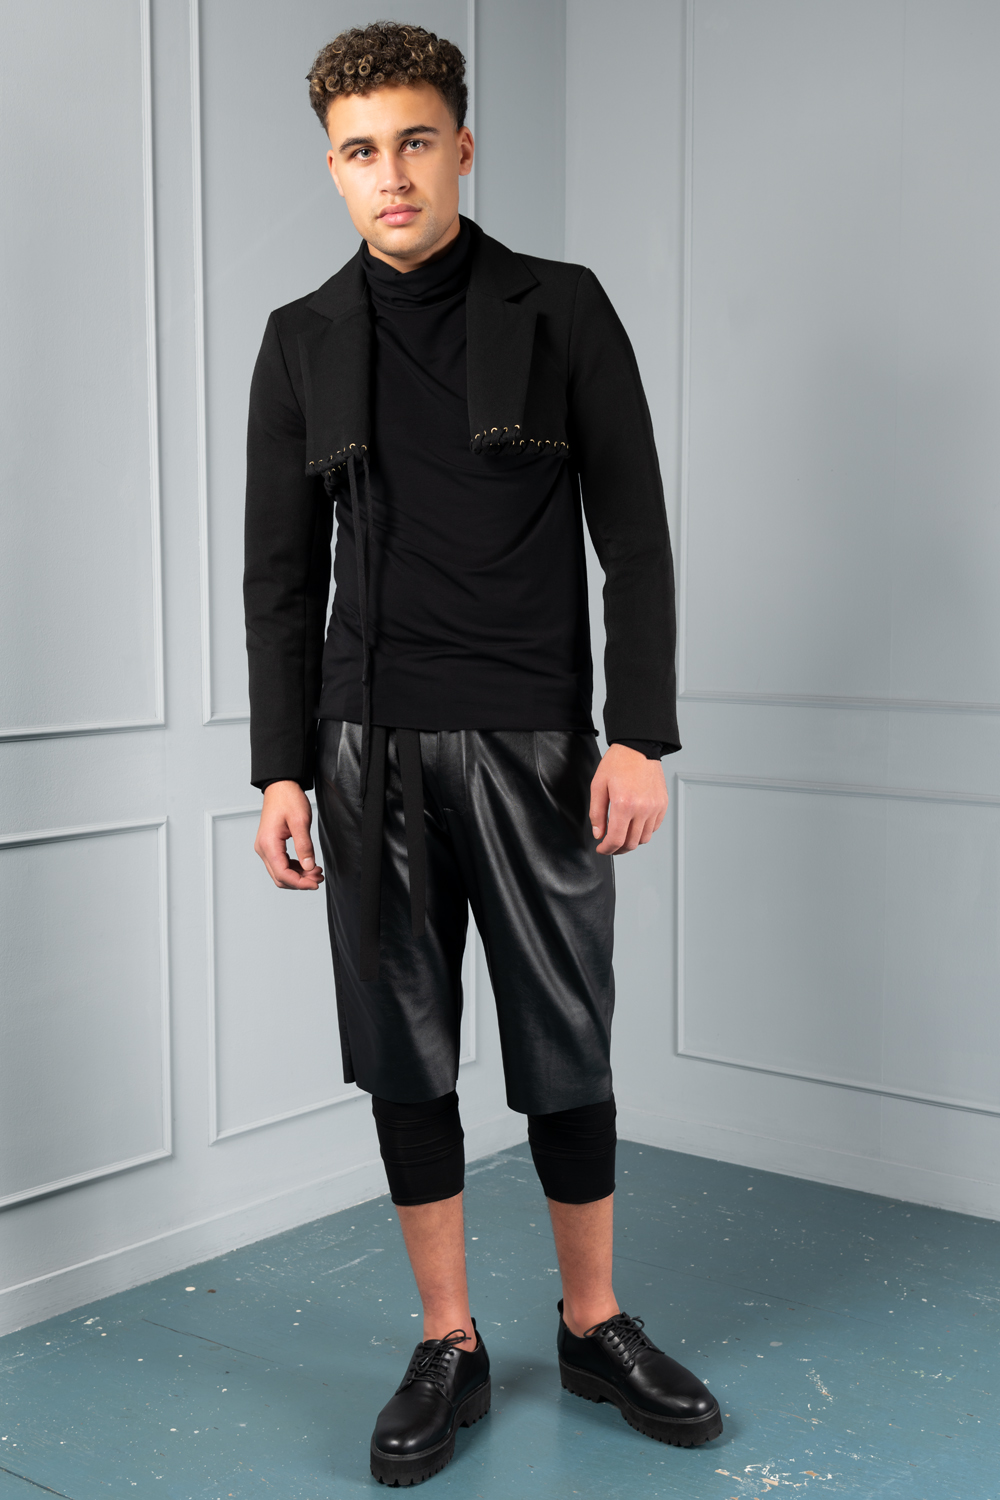 Men's Faux Leather Straight Cargo Pants in Black Size 32 by Fashion Nova |  Cargo pants, Black pants, Cargo pants men